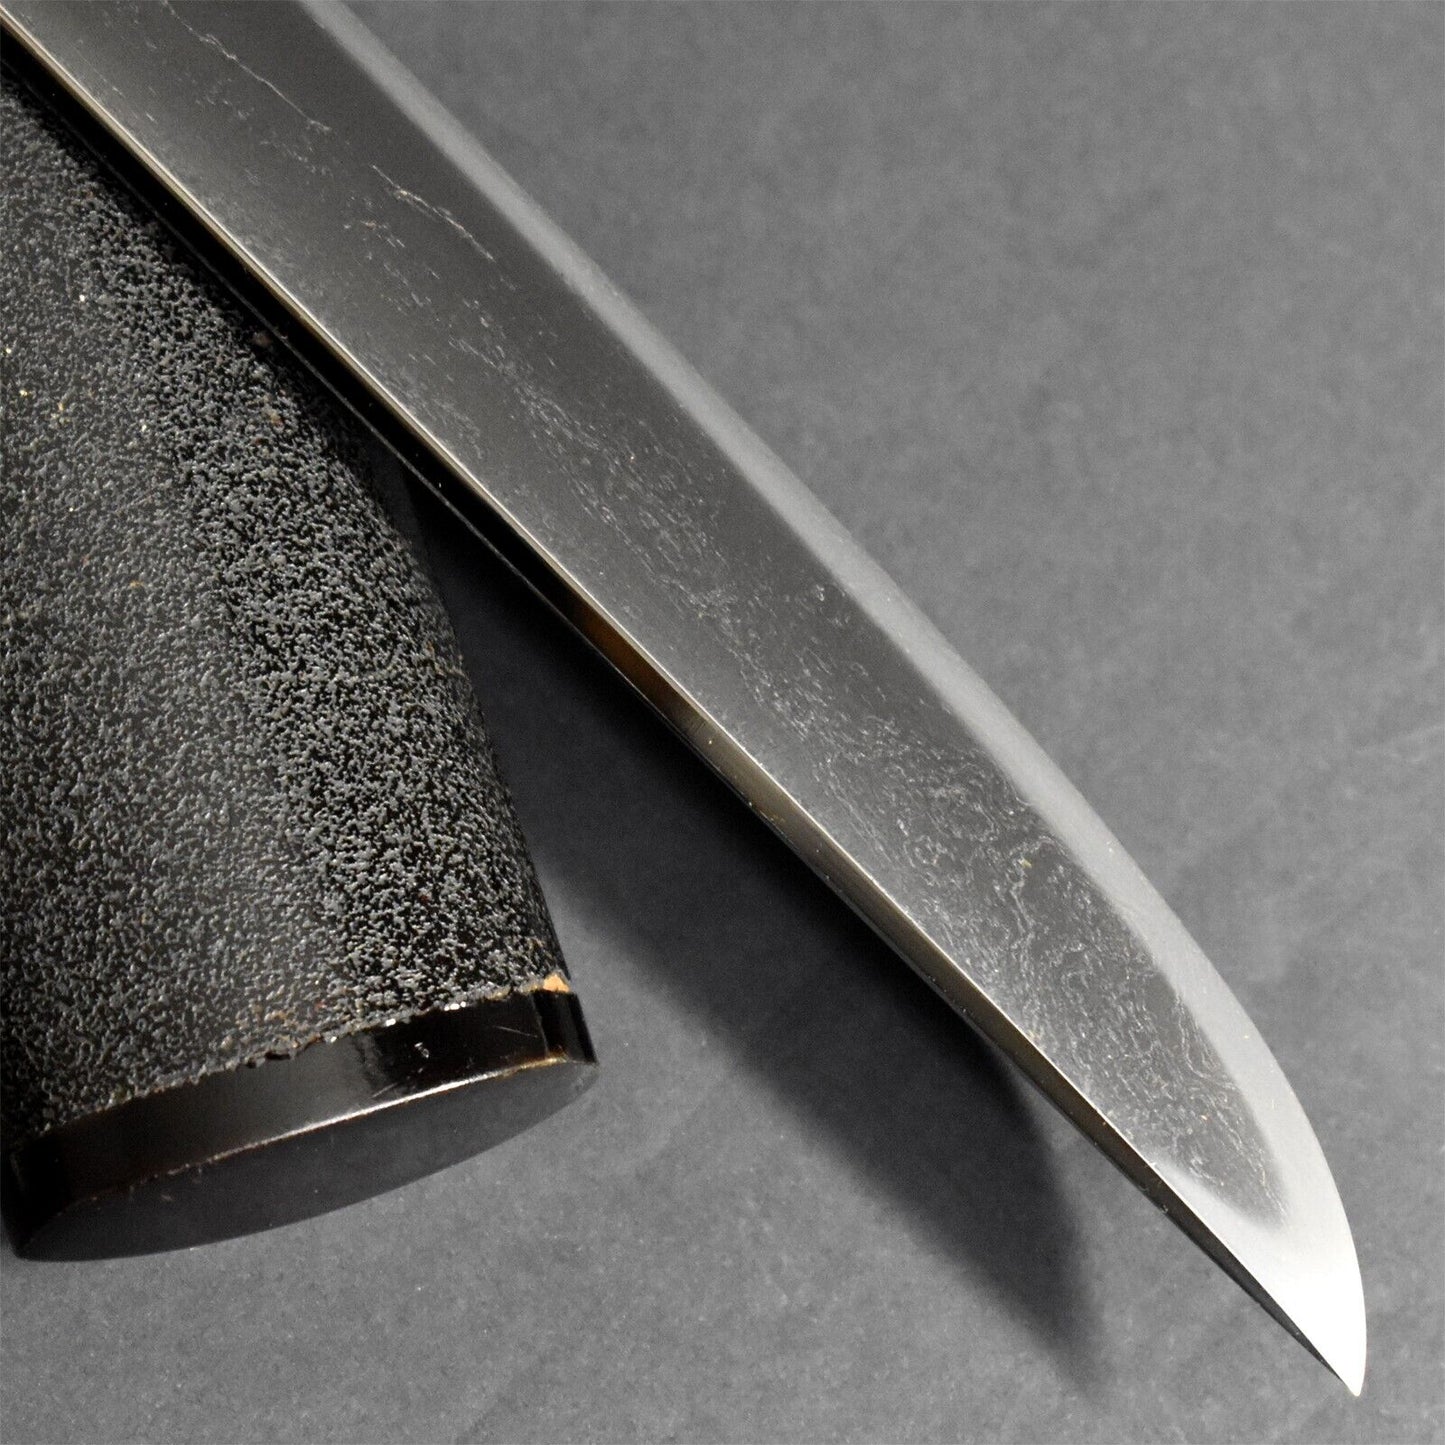 Antique Collectible Japanese Tanto Short Sword Original Samurai Dagger Blade Tamahagane Muromachi Era.